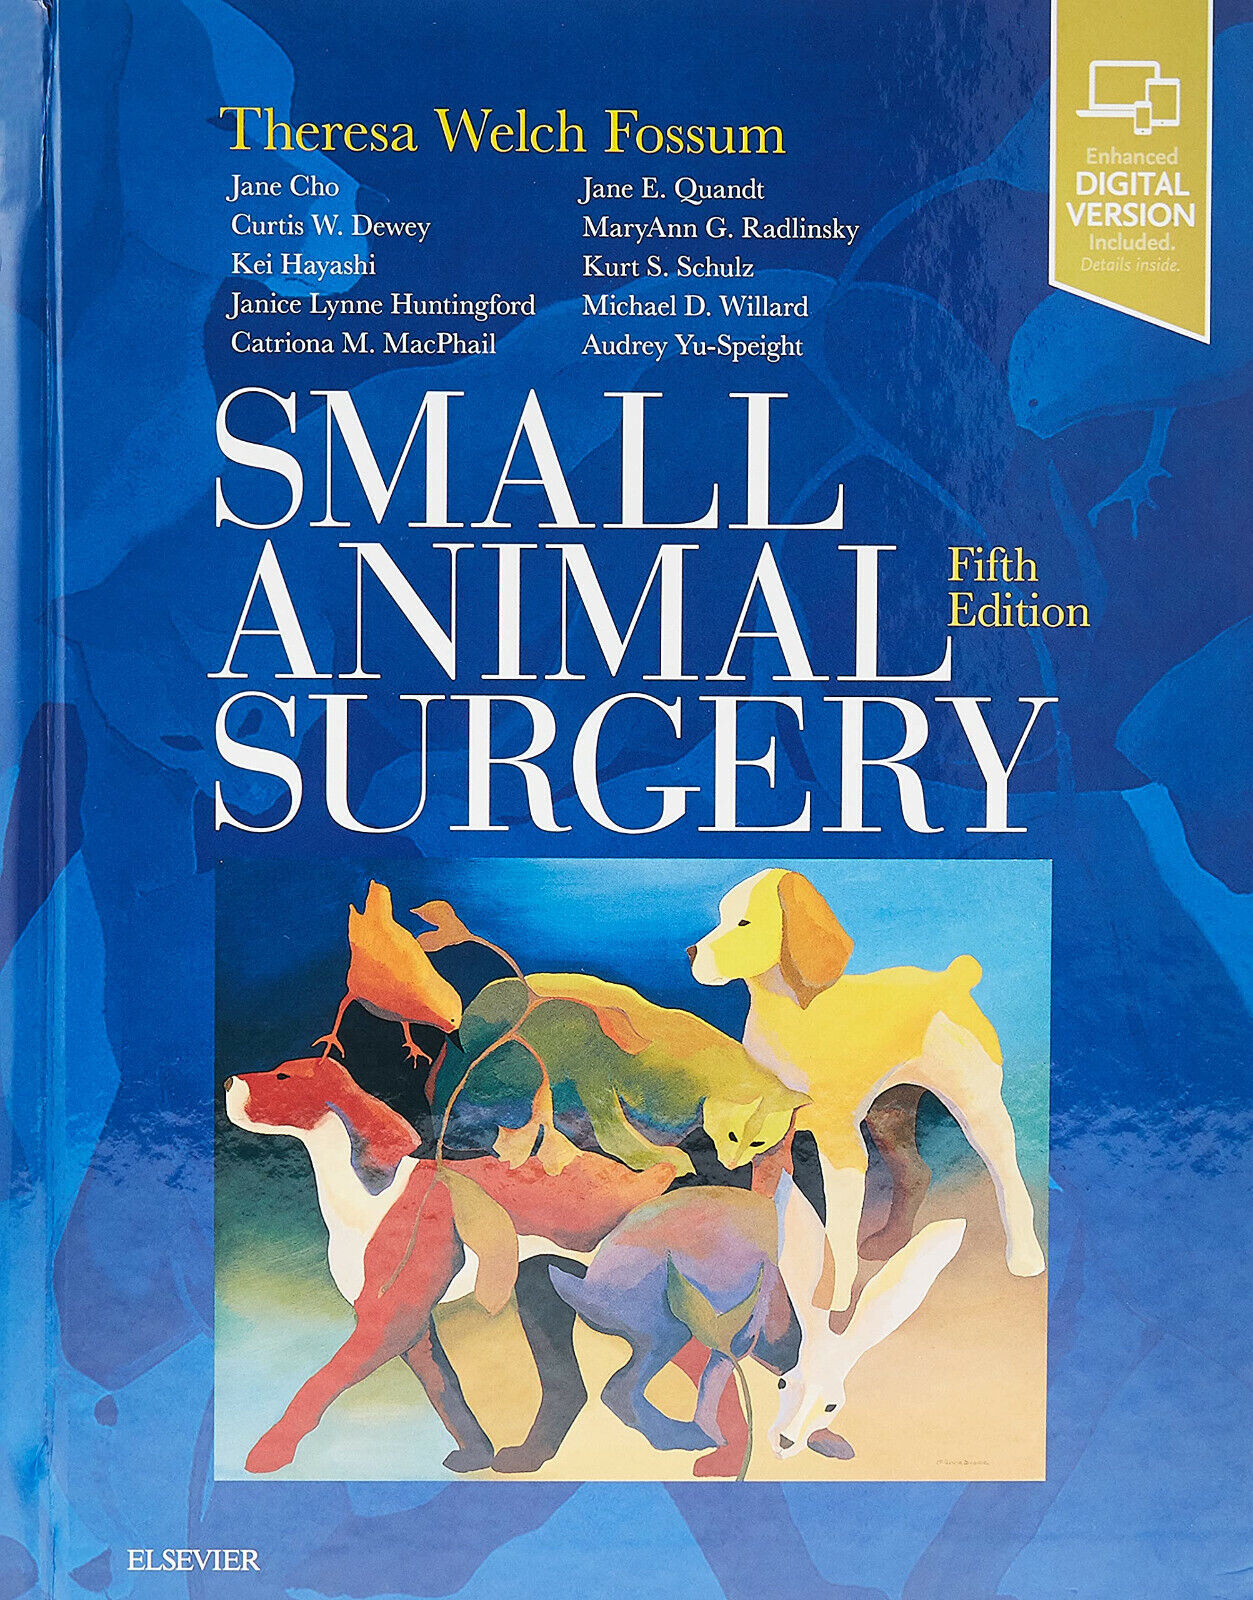 Small Animal Surgery - Theresa Welch Fossum - Mosby, 2018